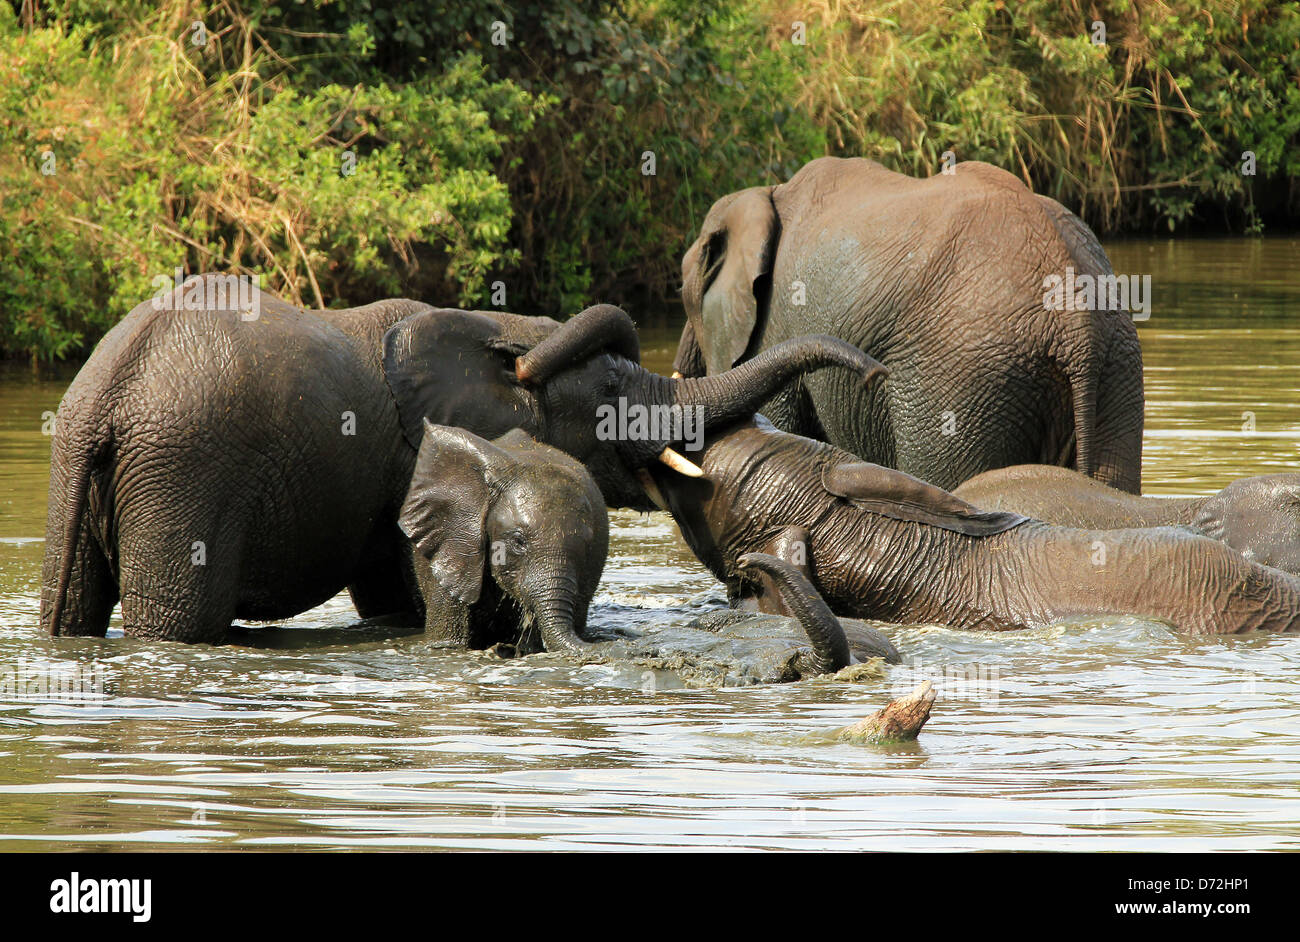 African Elephants (Loxodonta Africana) Wrestling in the Mud, Serengeti, Tanzania Stock Photo